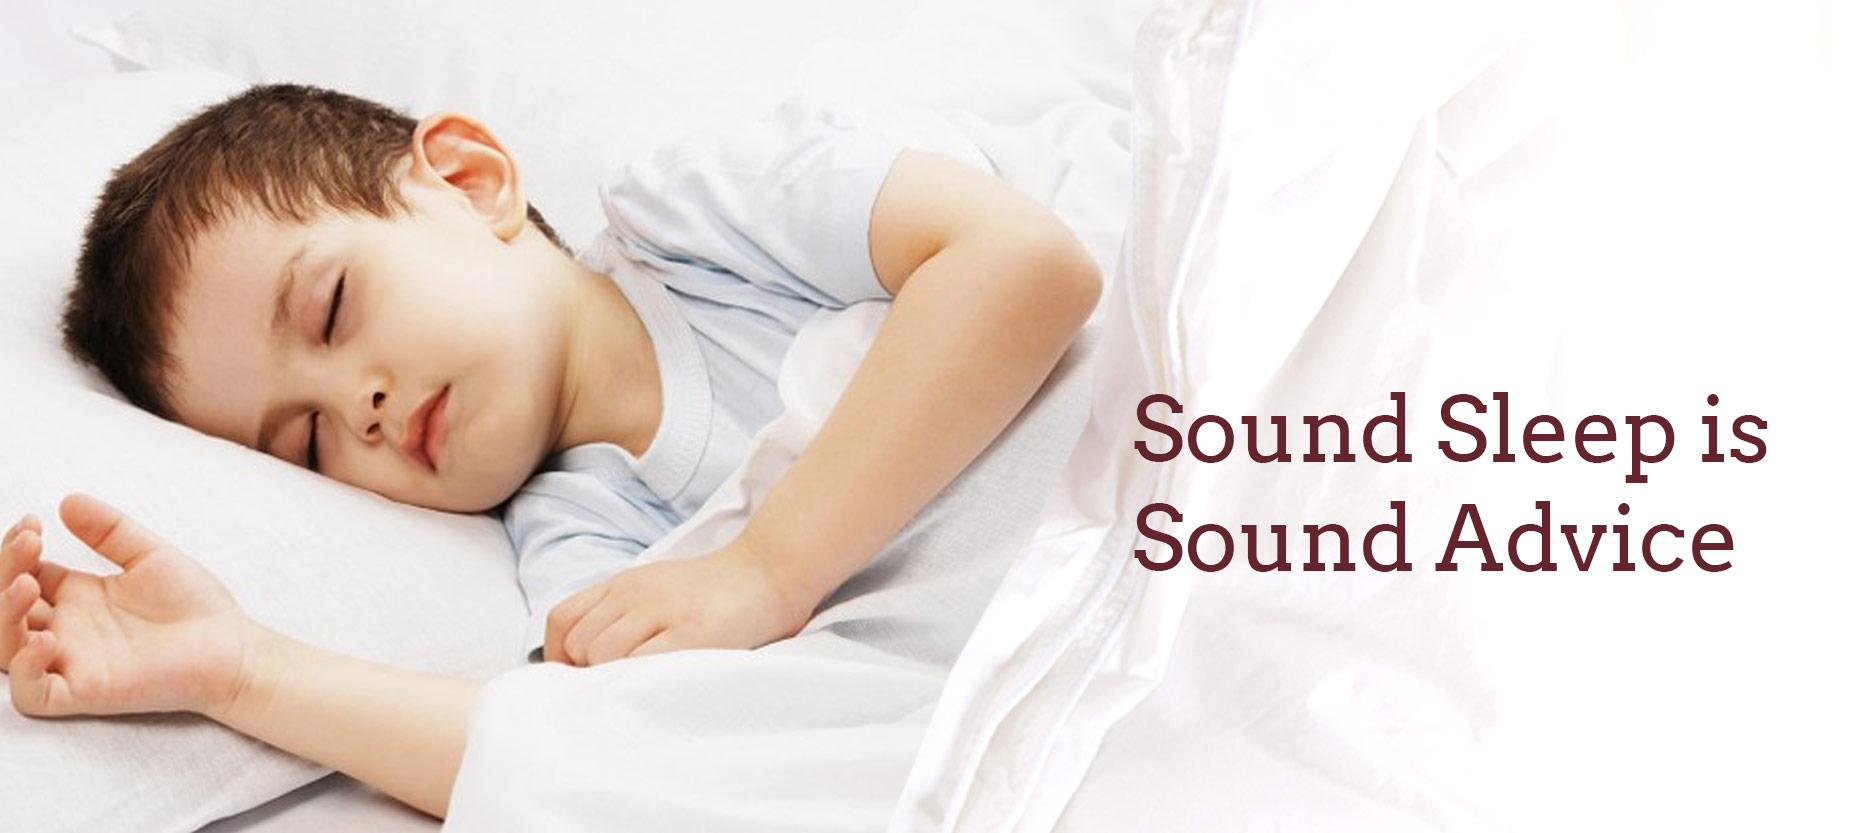 Sound Sleep is Sound Advice